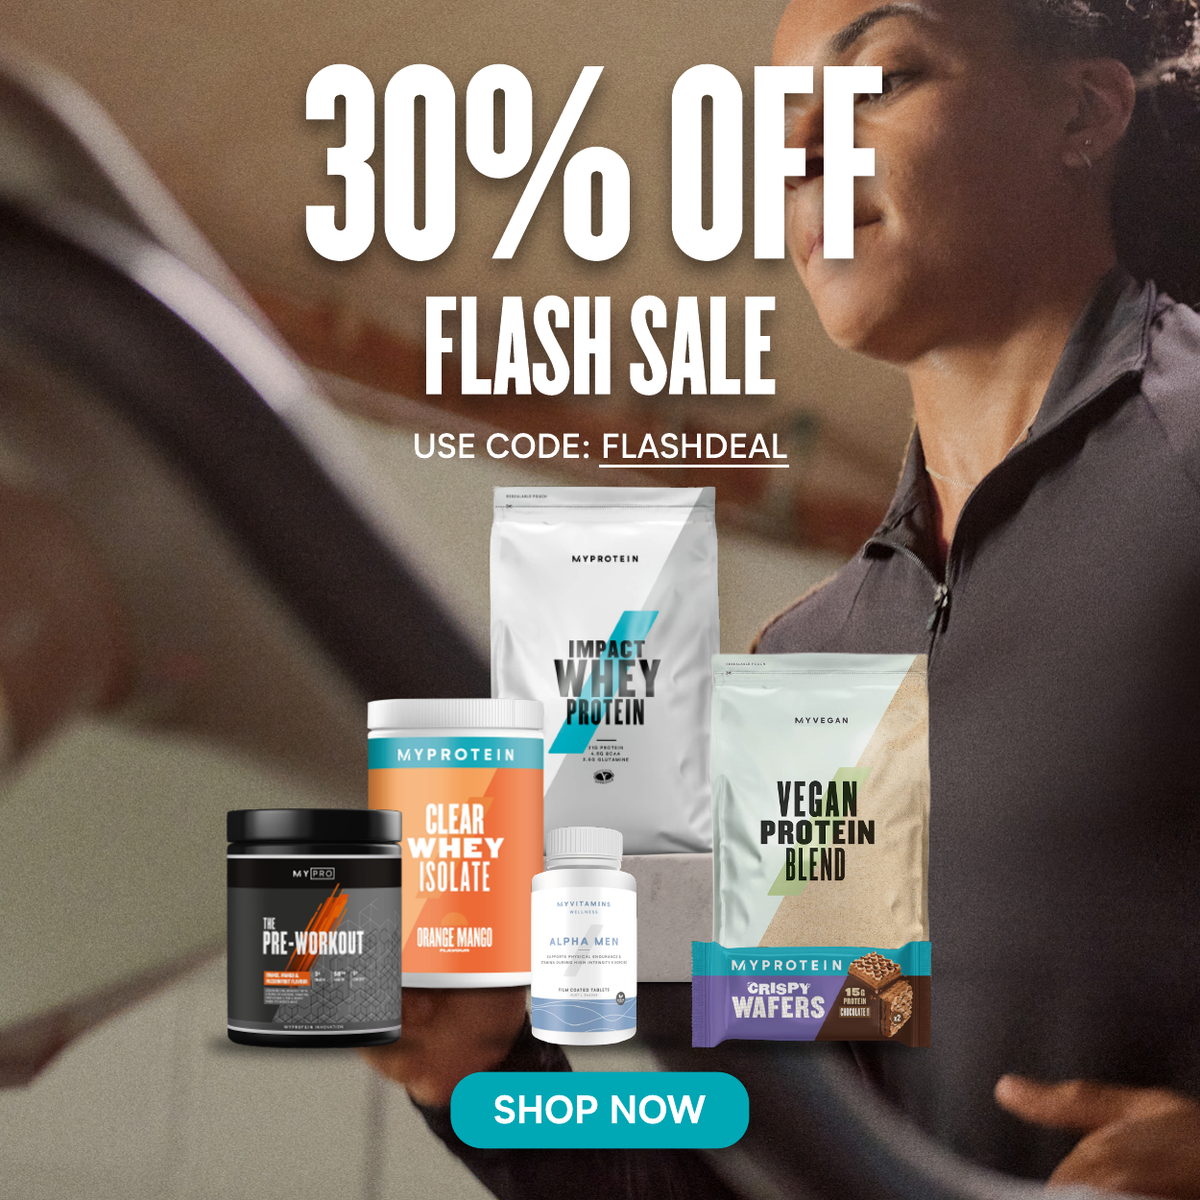 30% Off Flash Sale Use Code: FLASHDEAL